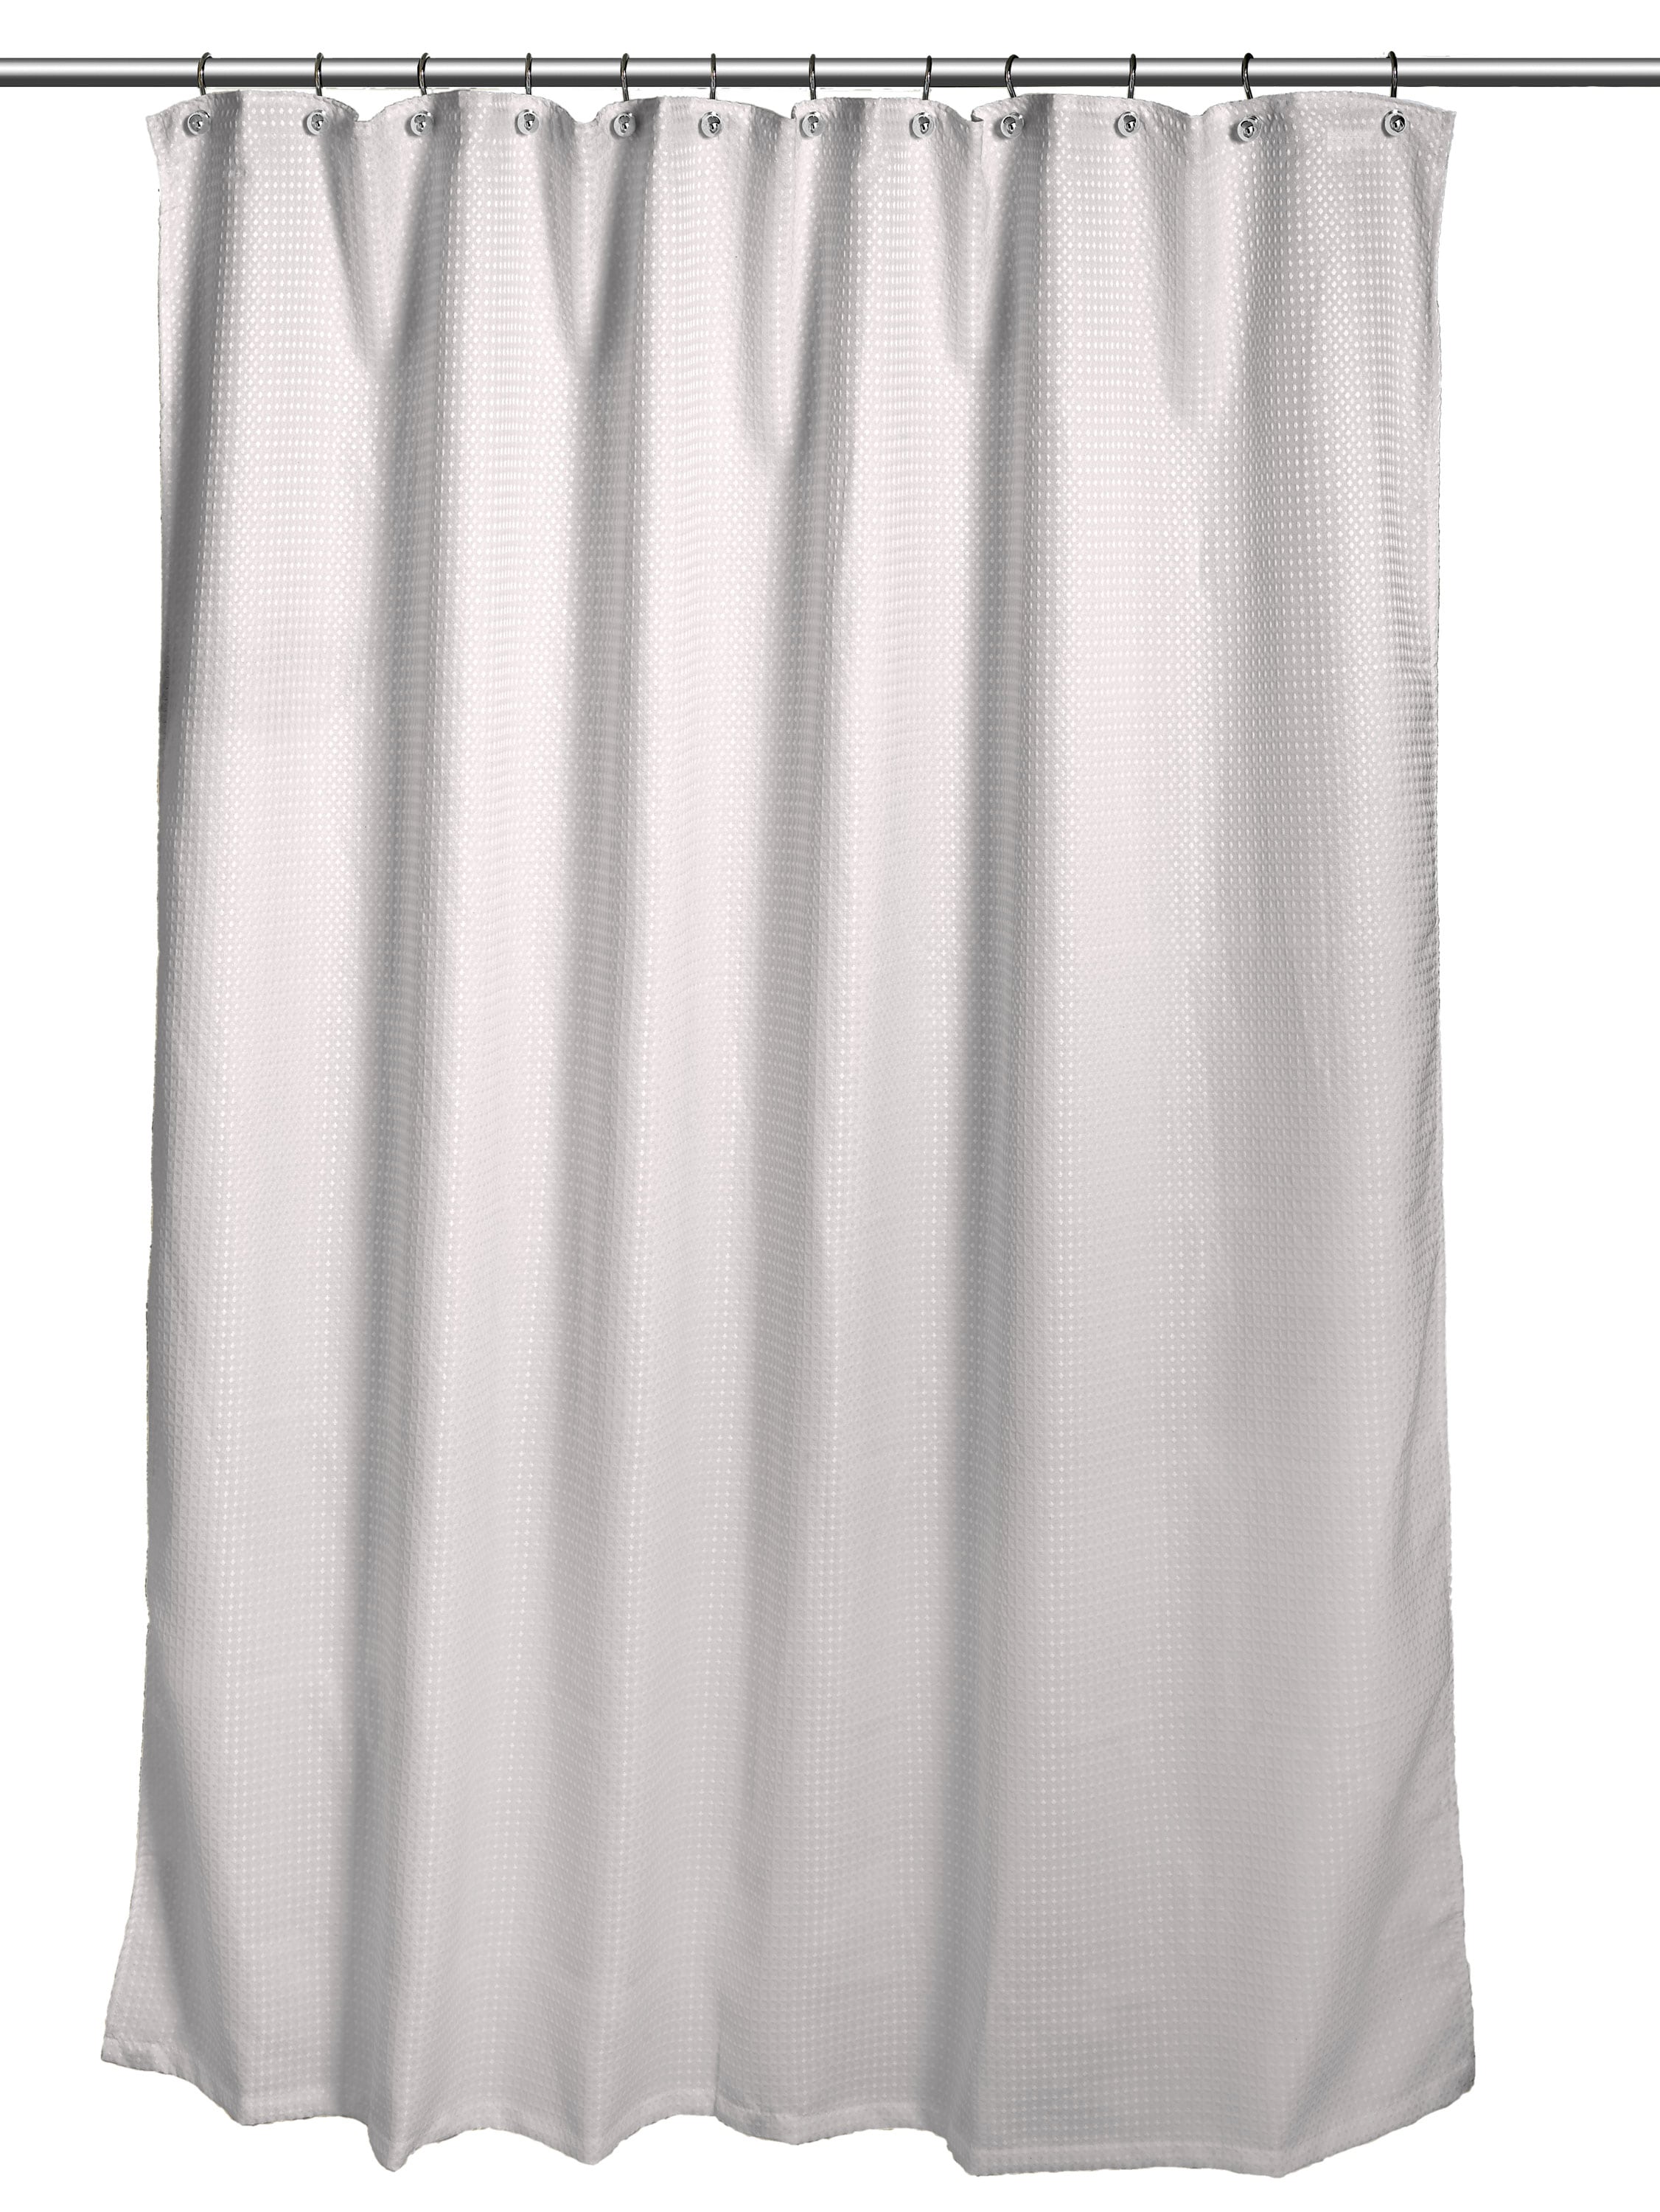 Wamsutta Luxury Fabric Ice Blue Shower Curtain Liner Size 70" W x 72" L 